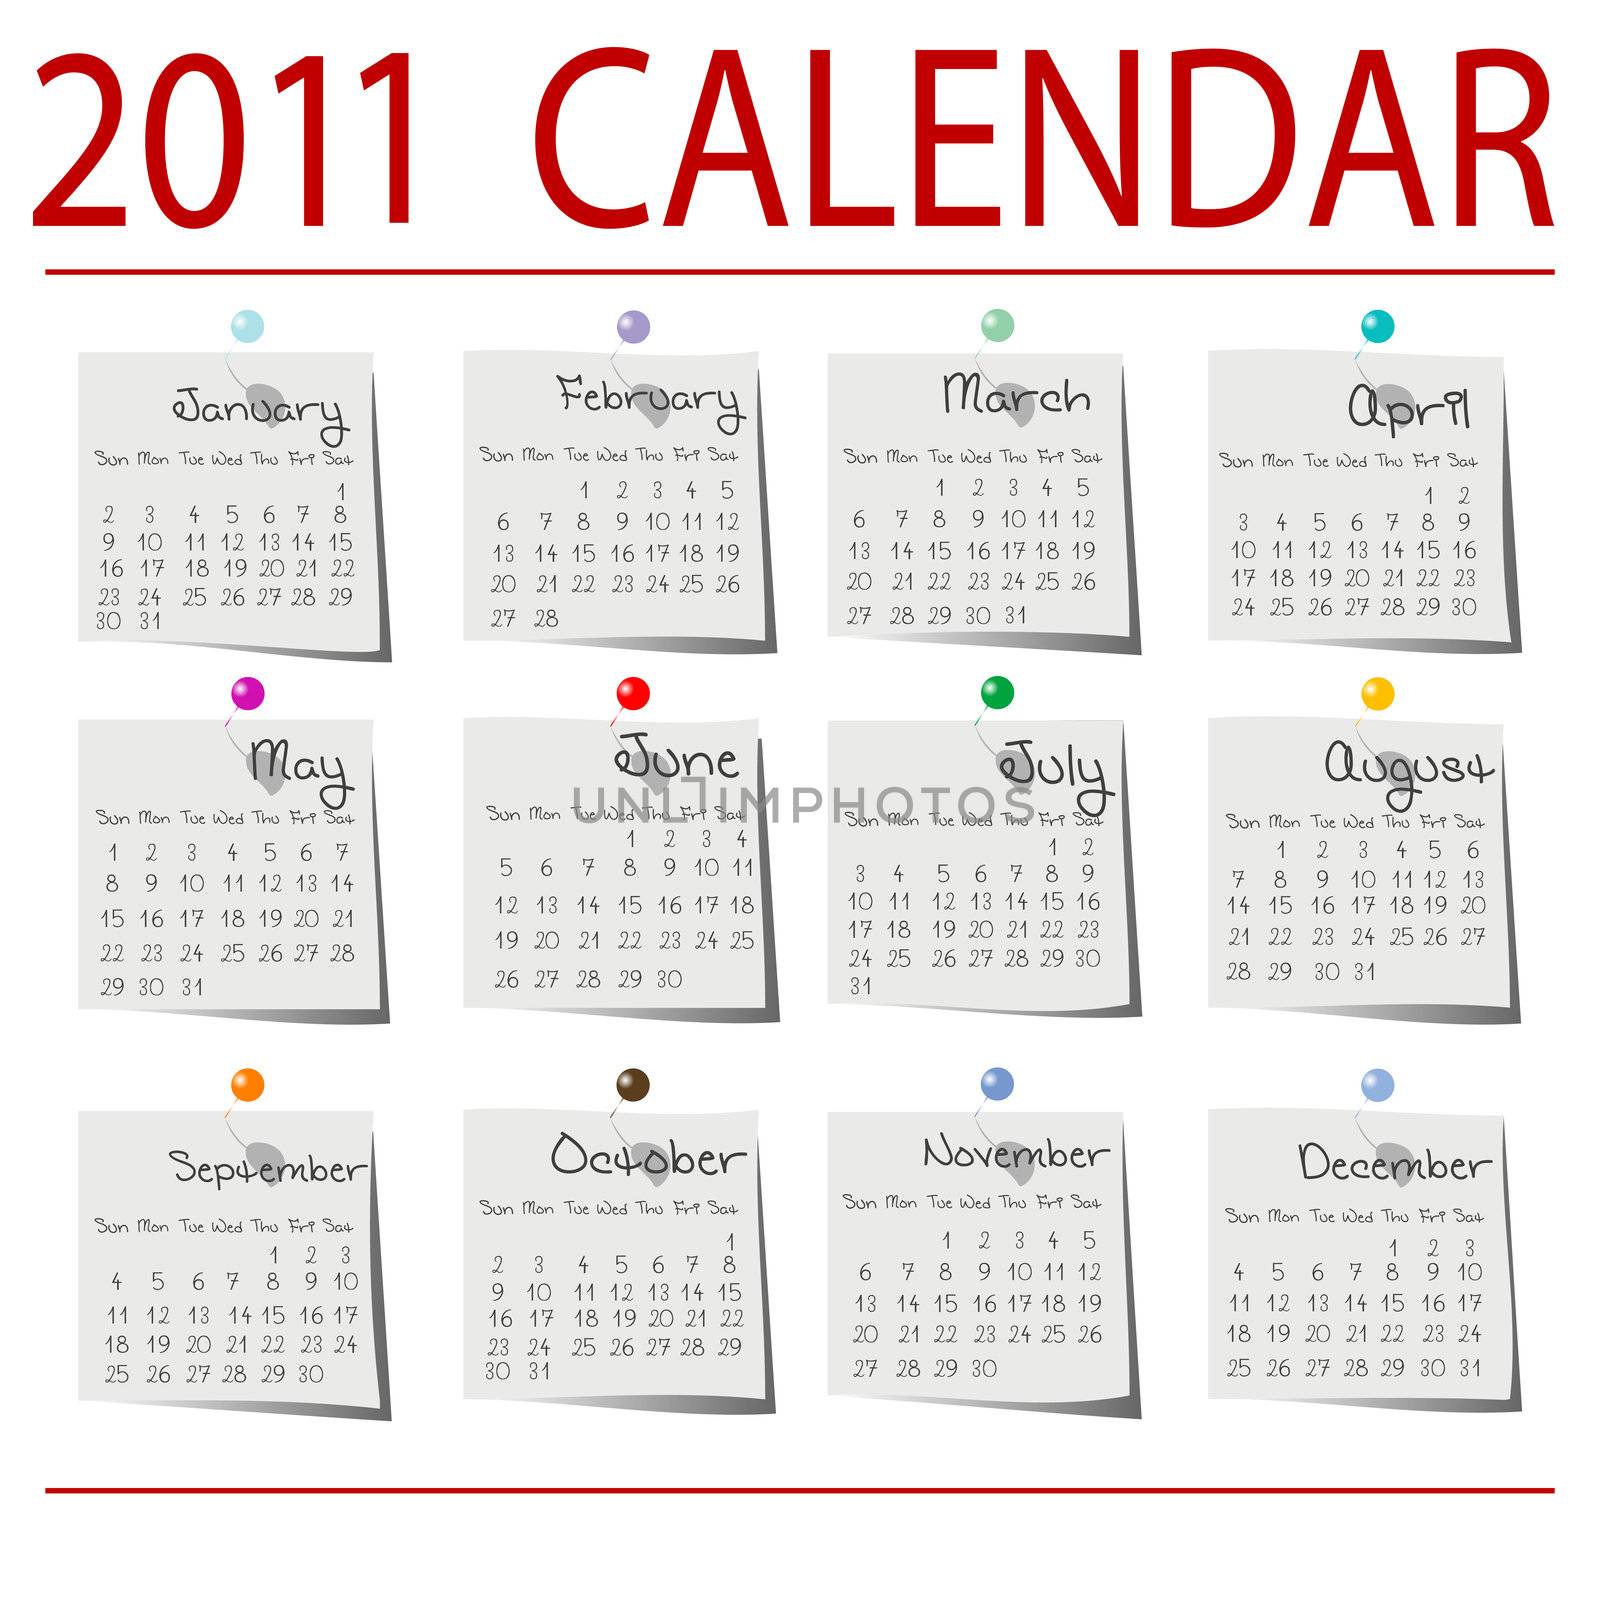 2010 Calendar on paper by Lirch